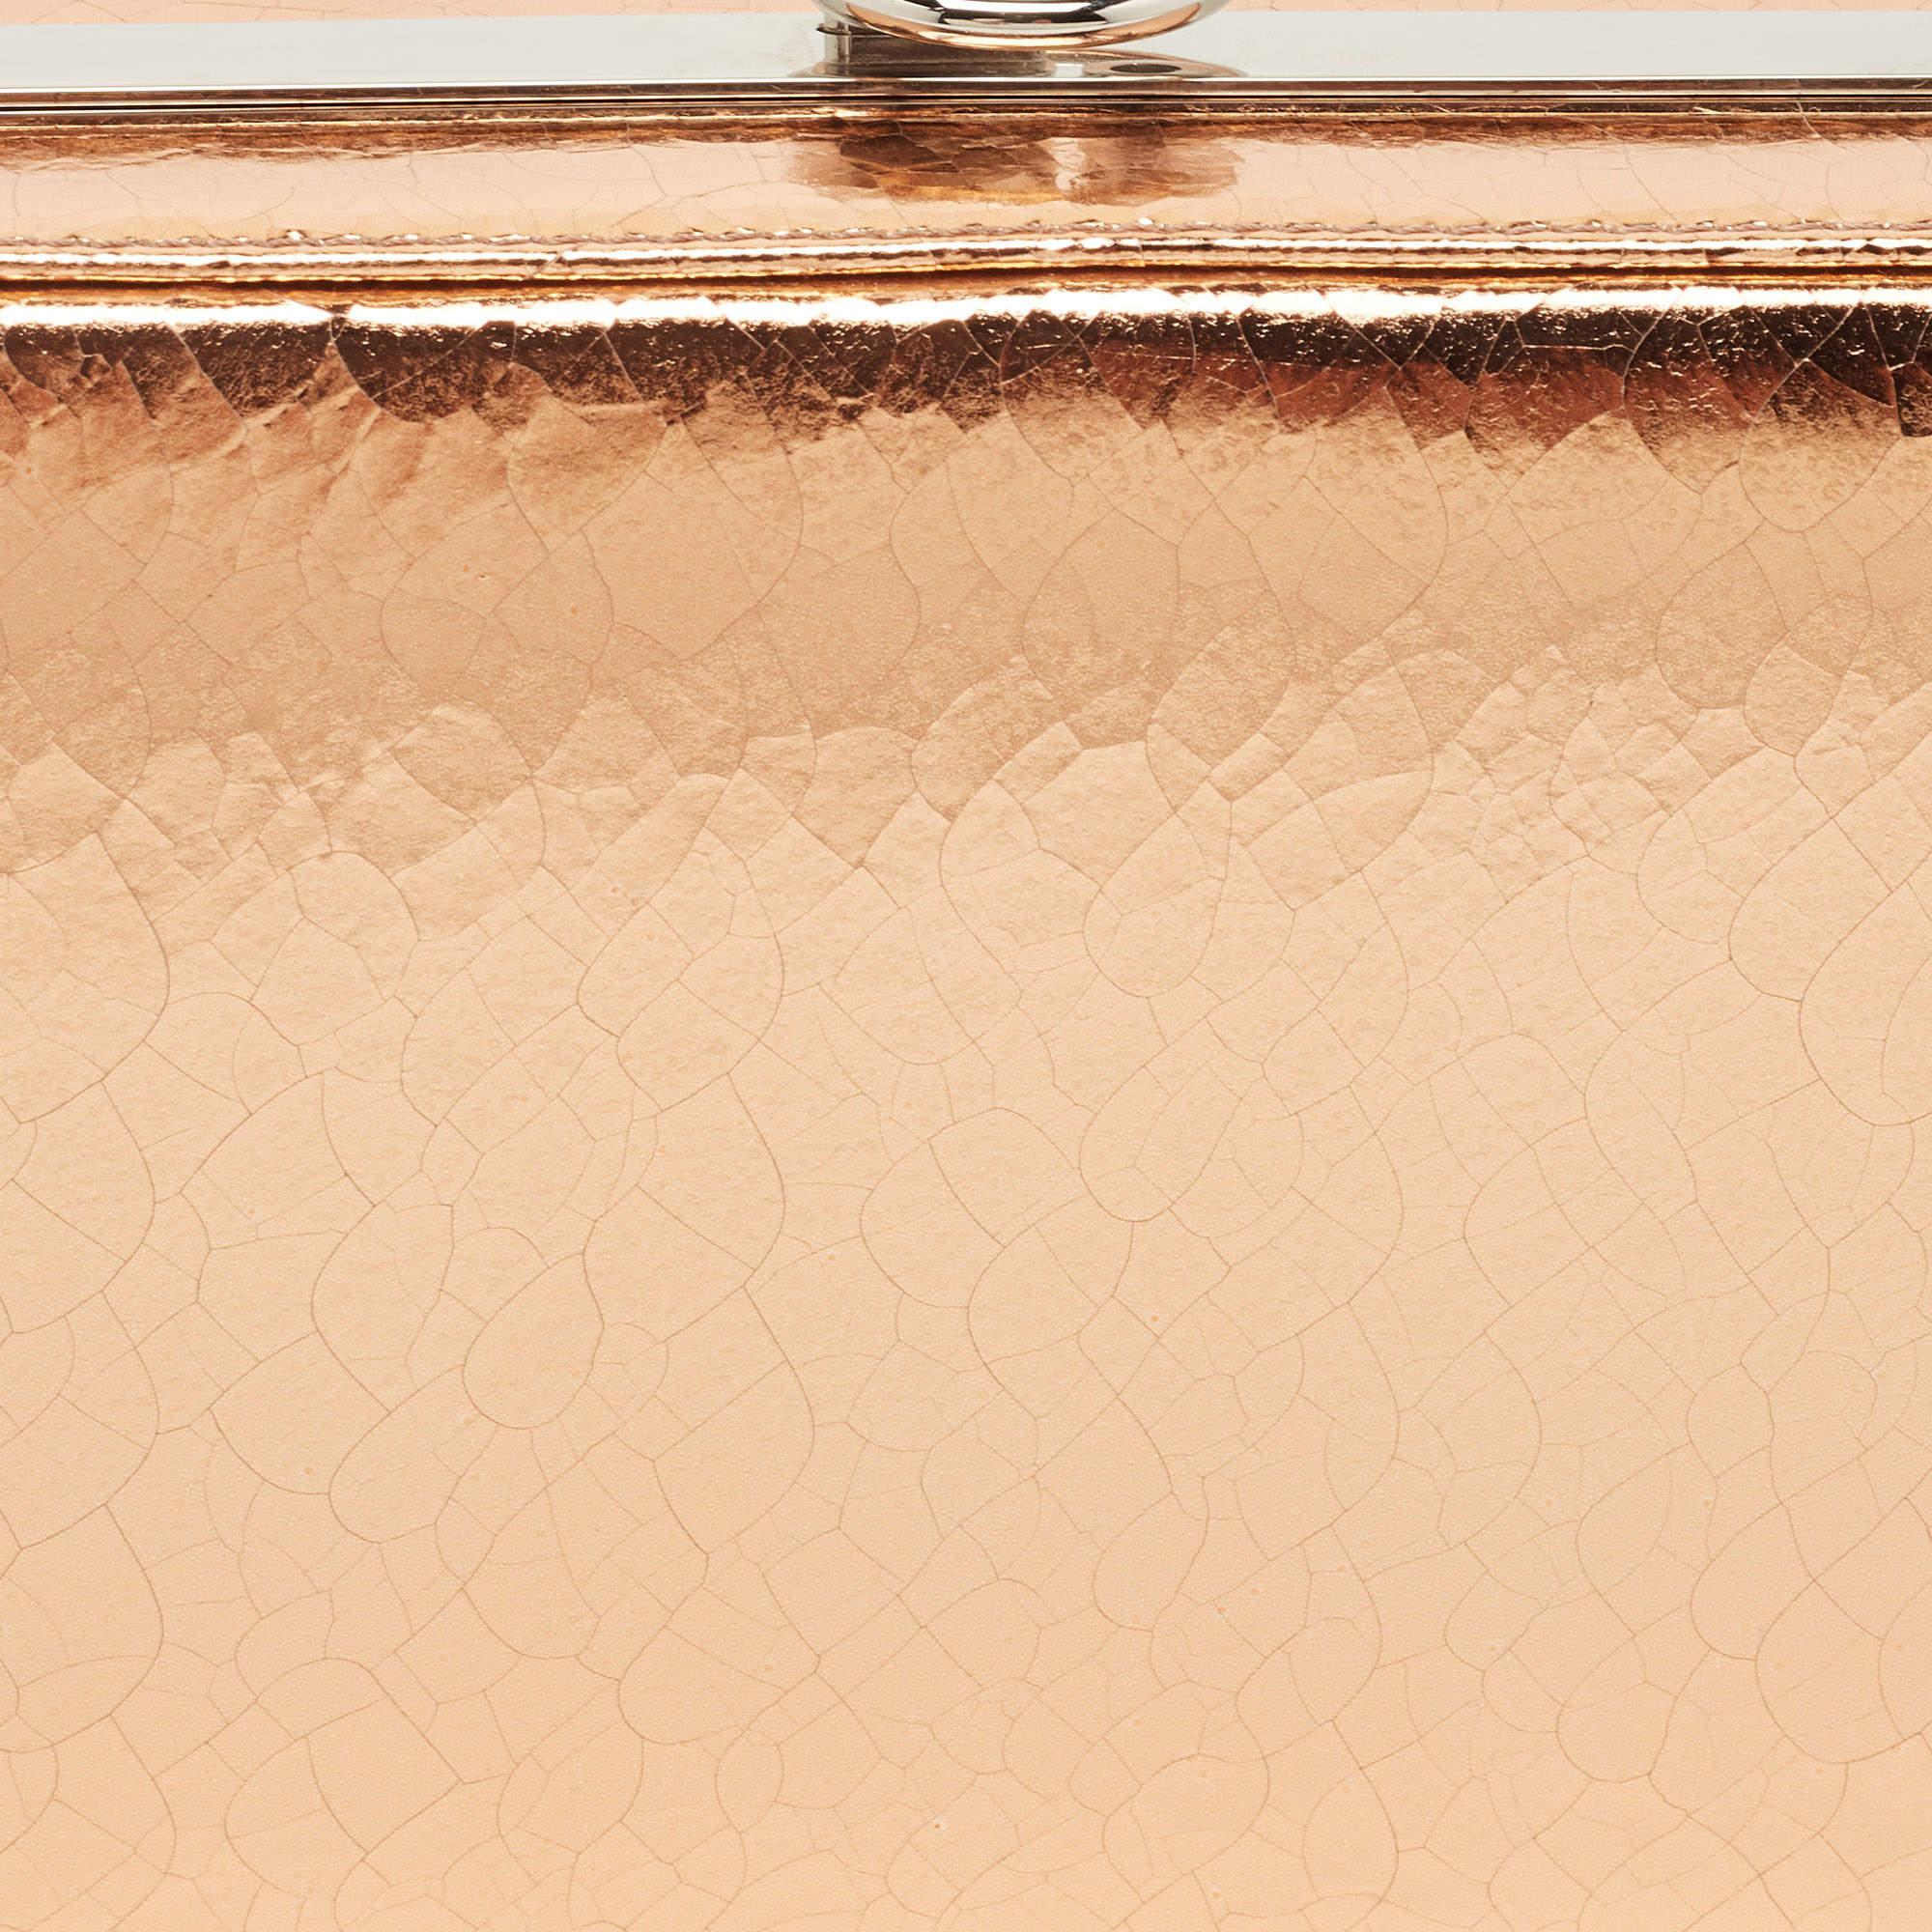 Dior Bronze Foil Leather Frame Clutch In Good Condition For Sale In Dubai, Al Qouz 2